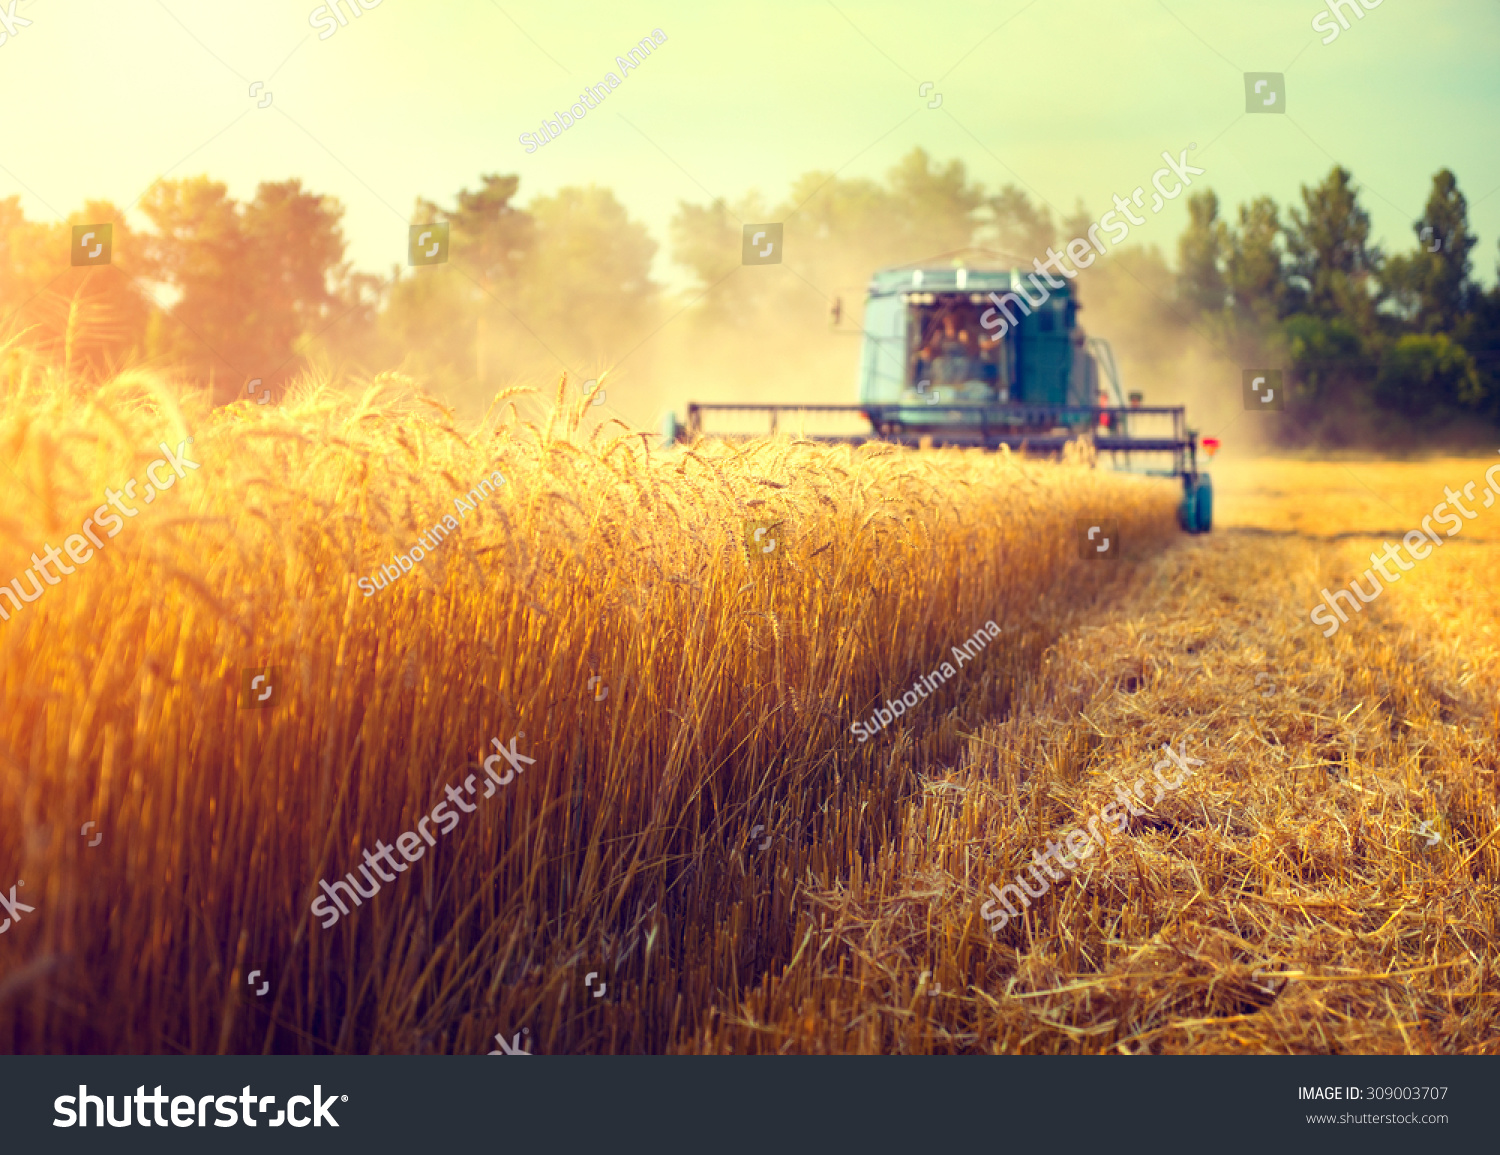 Harvester machine to harvest wheat field working. Combine harvester agriculture machine harvesting golden ripe wheat field. Agriculture #309003707